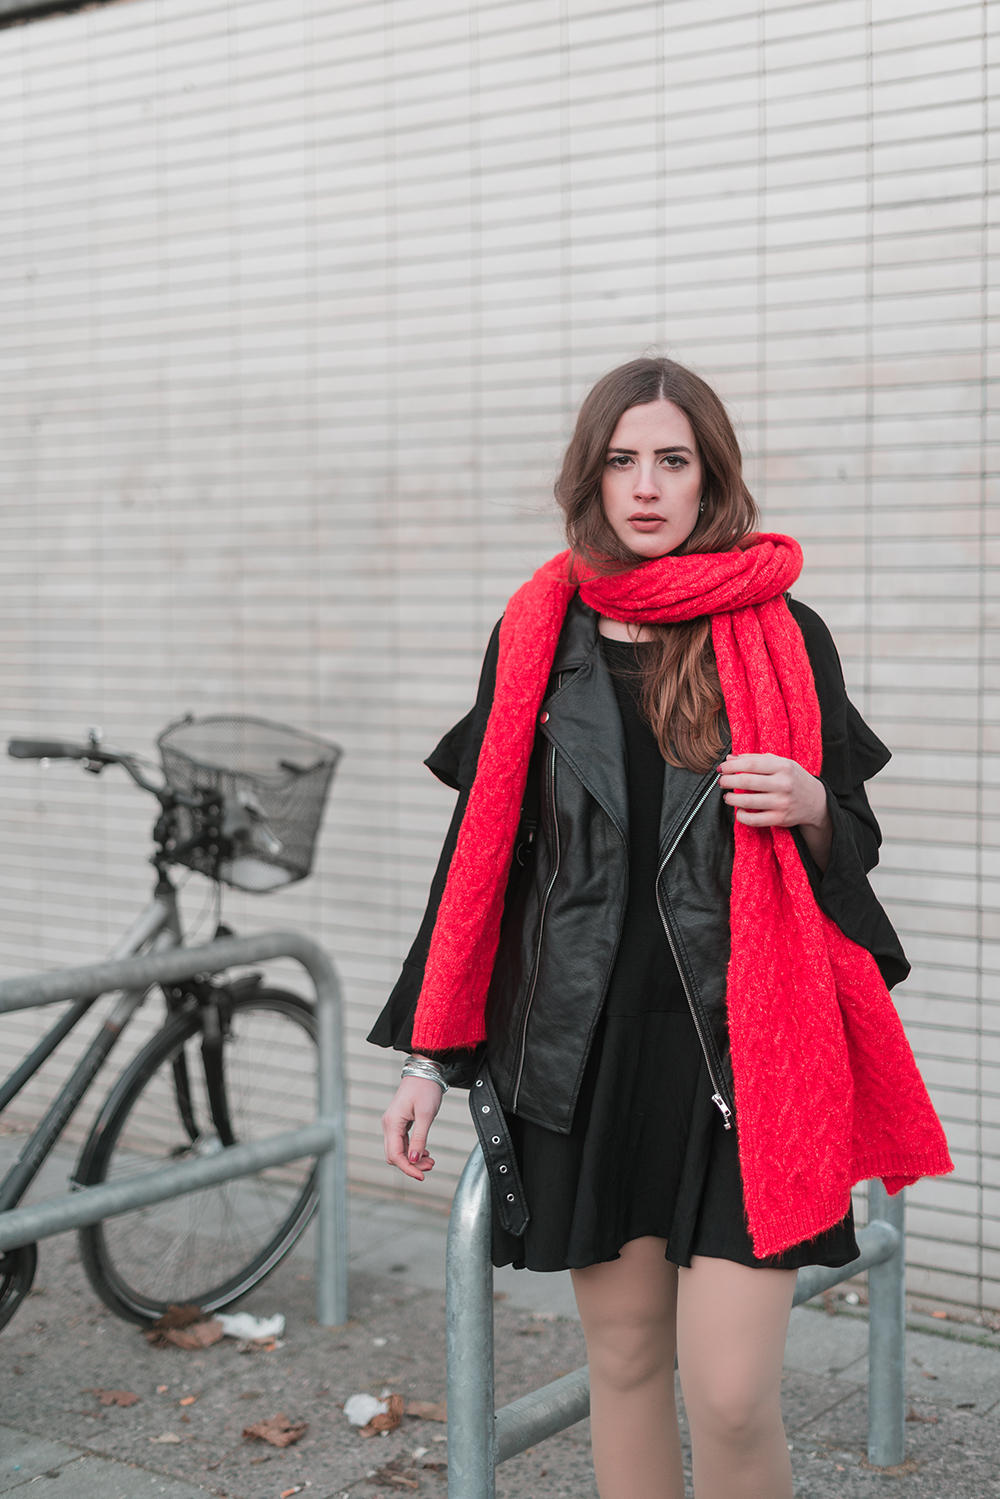 Statement Schal-Outfit mit Schal-Winteroutfit Boots-Modeblog Berlin-andysparkles